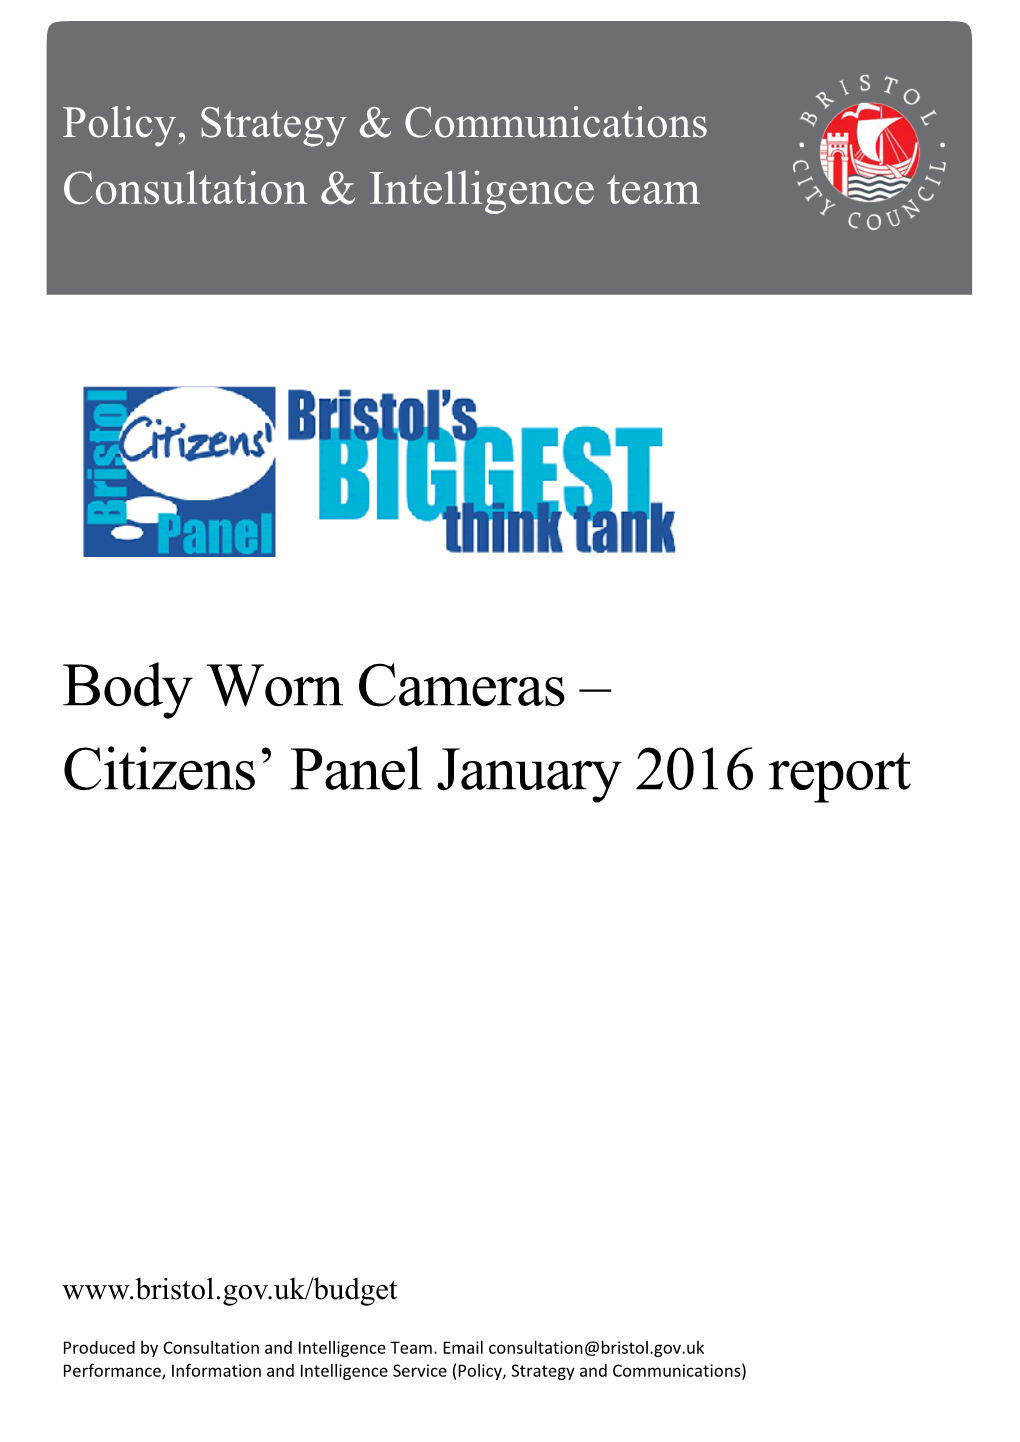 Body Worn Cameras – Citizens’ Panel January 2016 Report